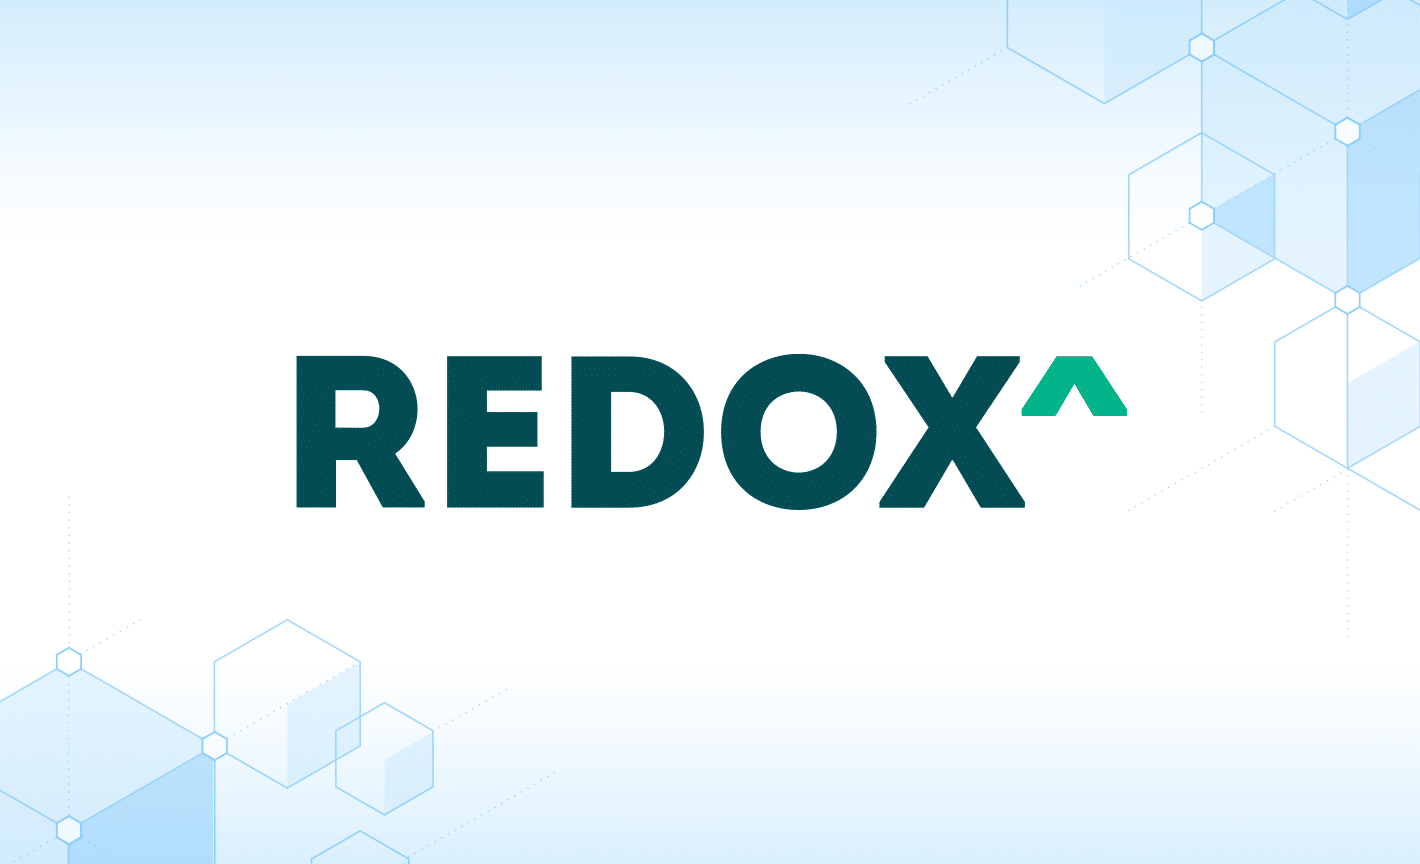 Redox logo